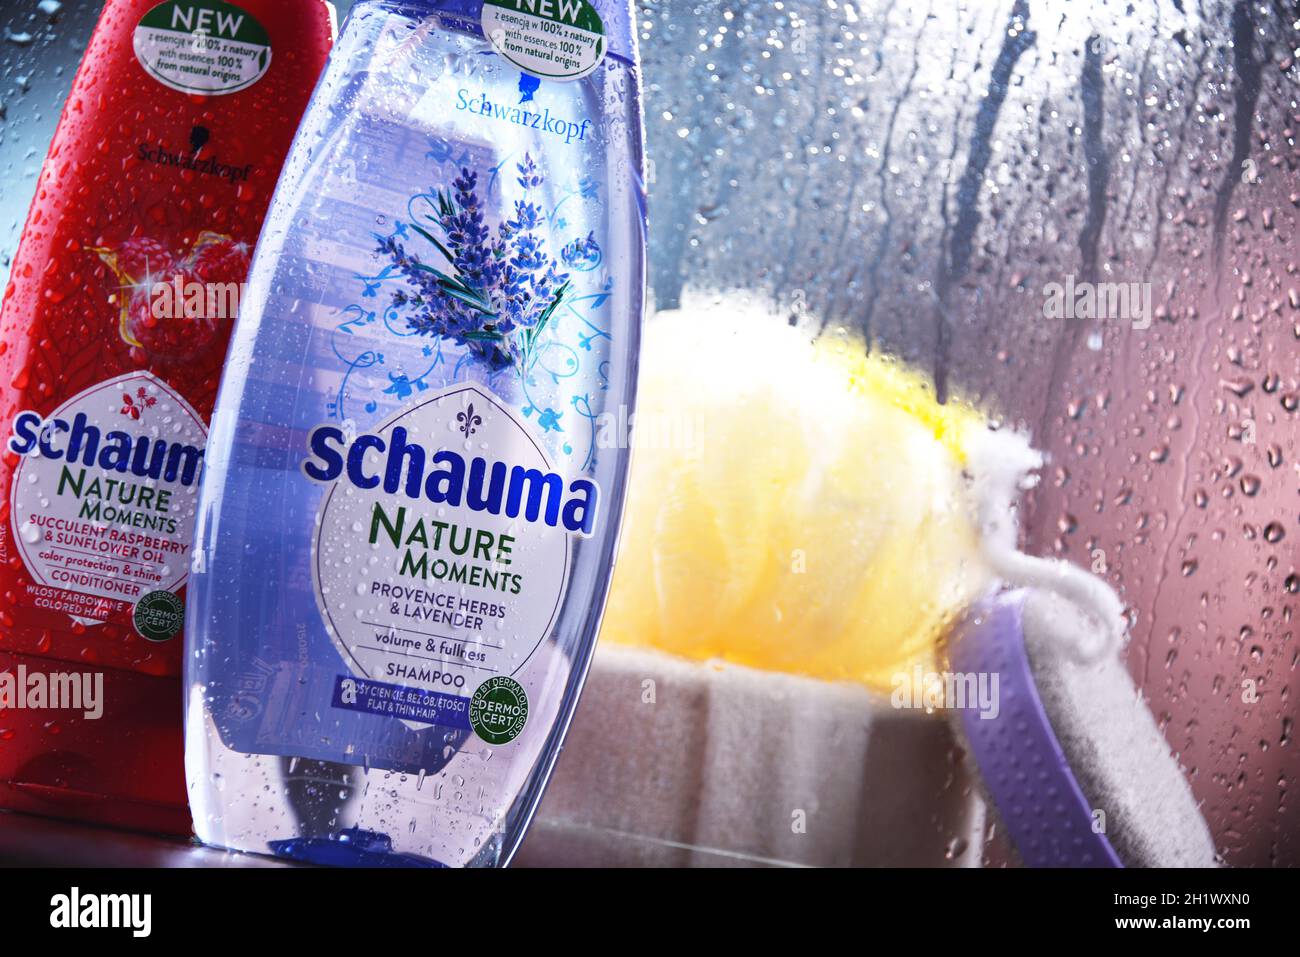 POZNAN, POL - OCT 23, 2020: Bottles of Schwarzkopf products, popular brand of first liquid shampoo developed by German chemist Hans Schwarzkopf in 192 Stock Photo